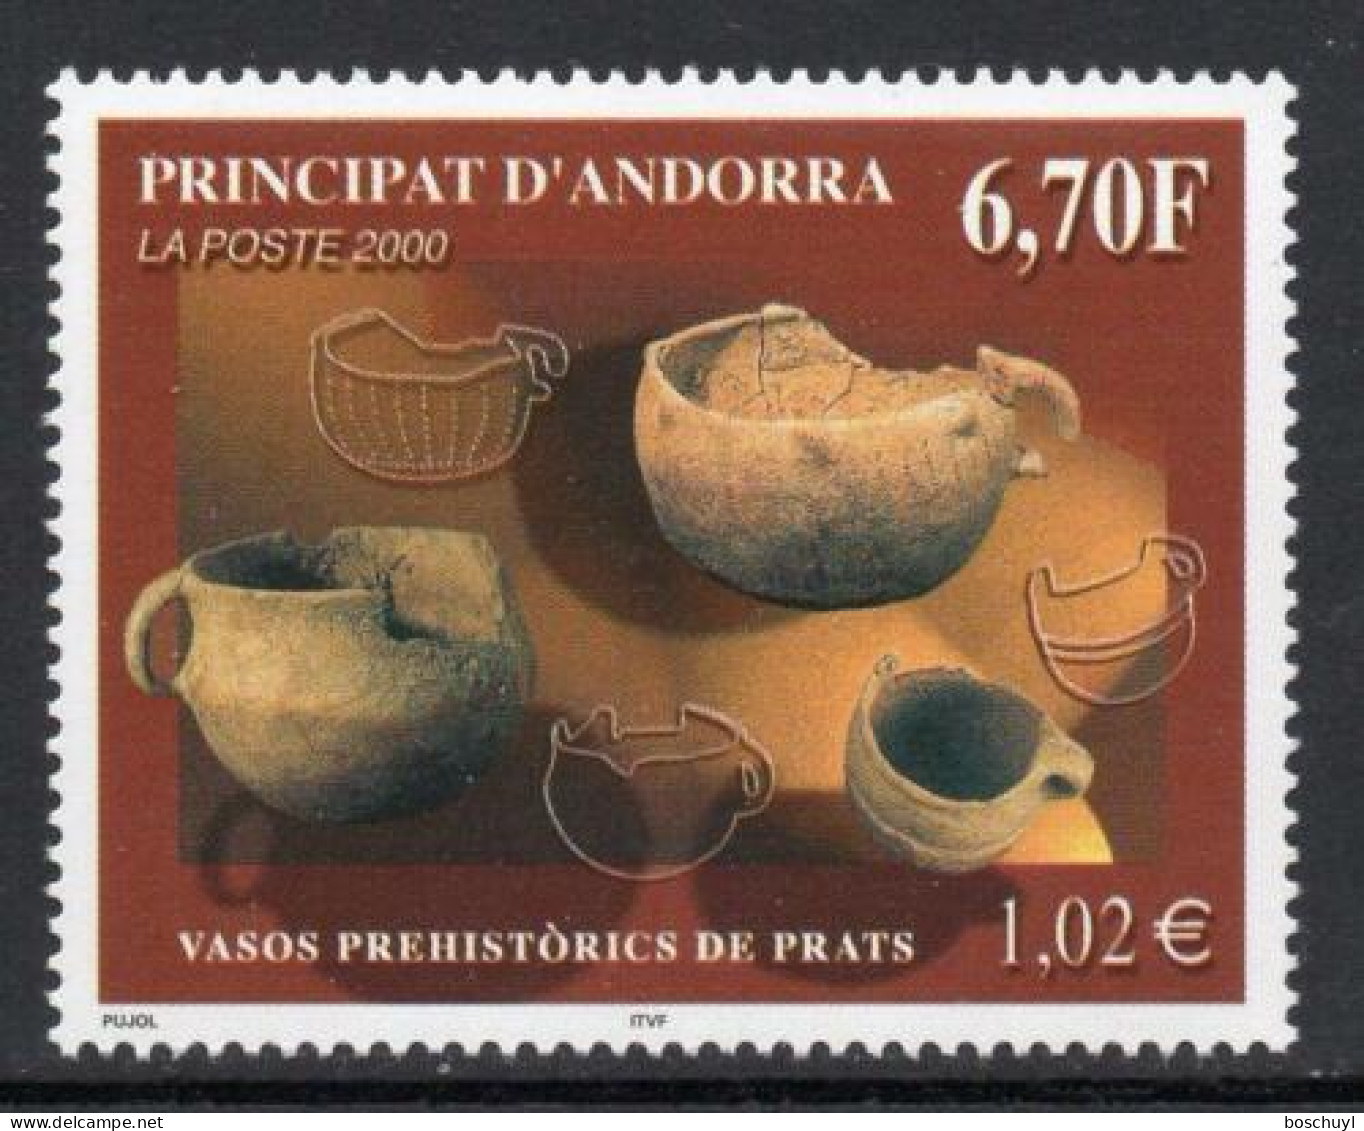 Andorra, French, 2000, Prehistoric Pottery, Ceramics, Archaeology, MNH, Michel 559 - Neufs